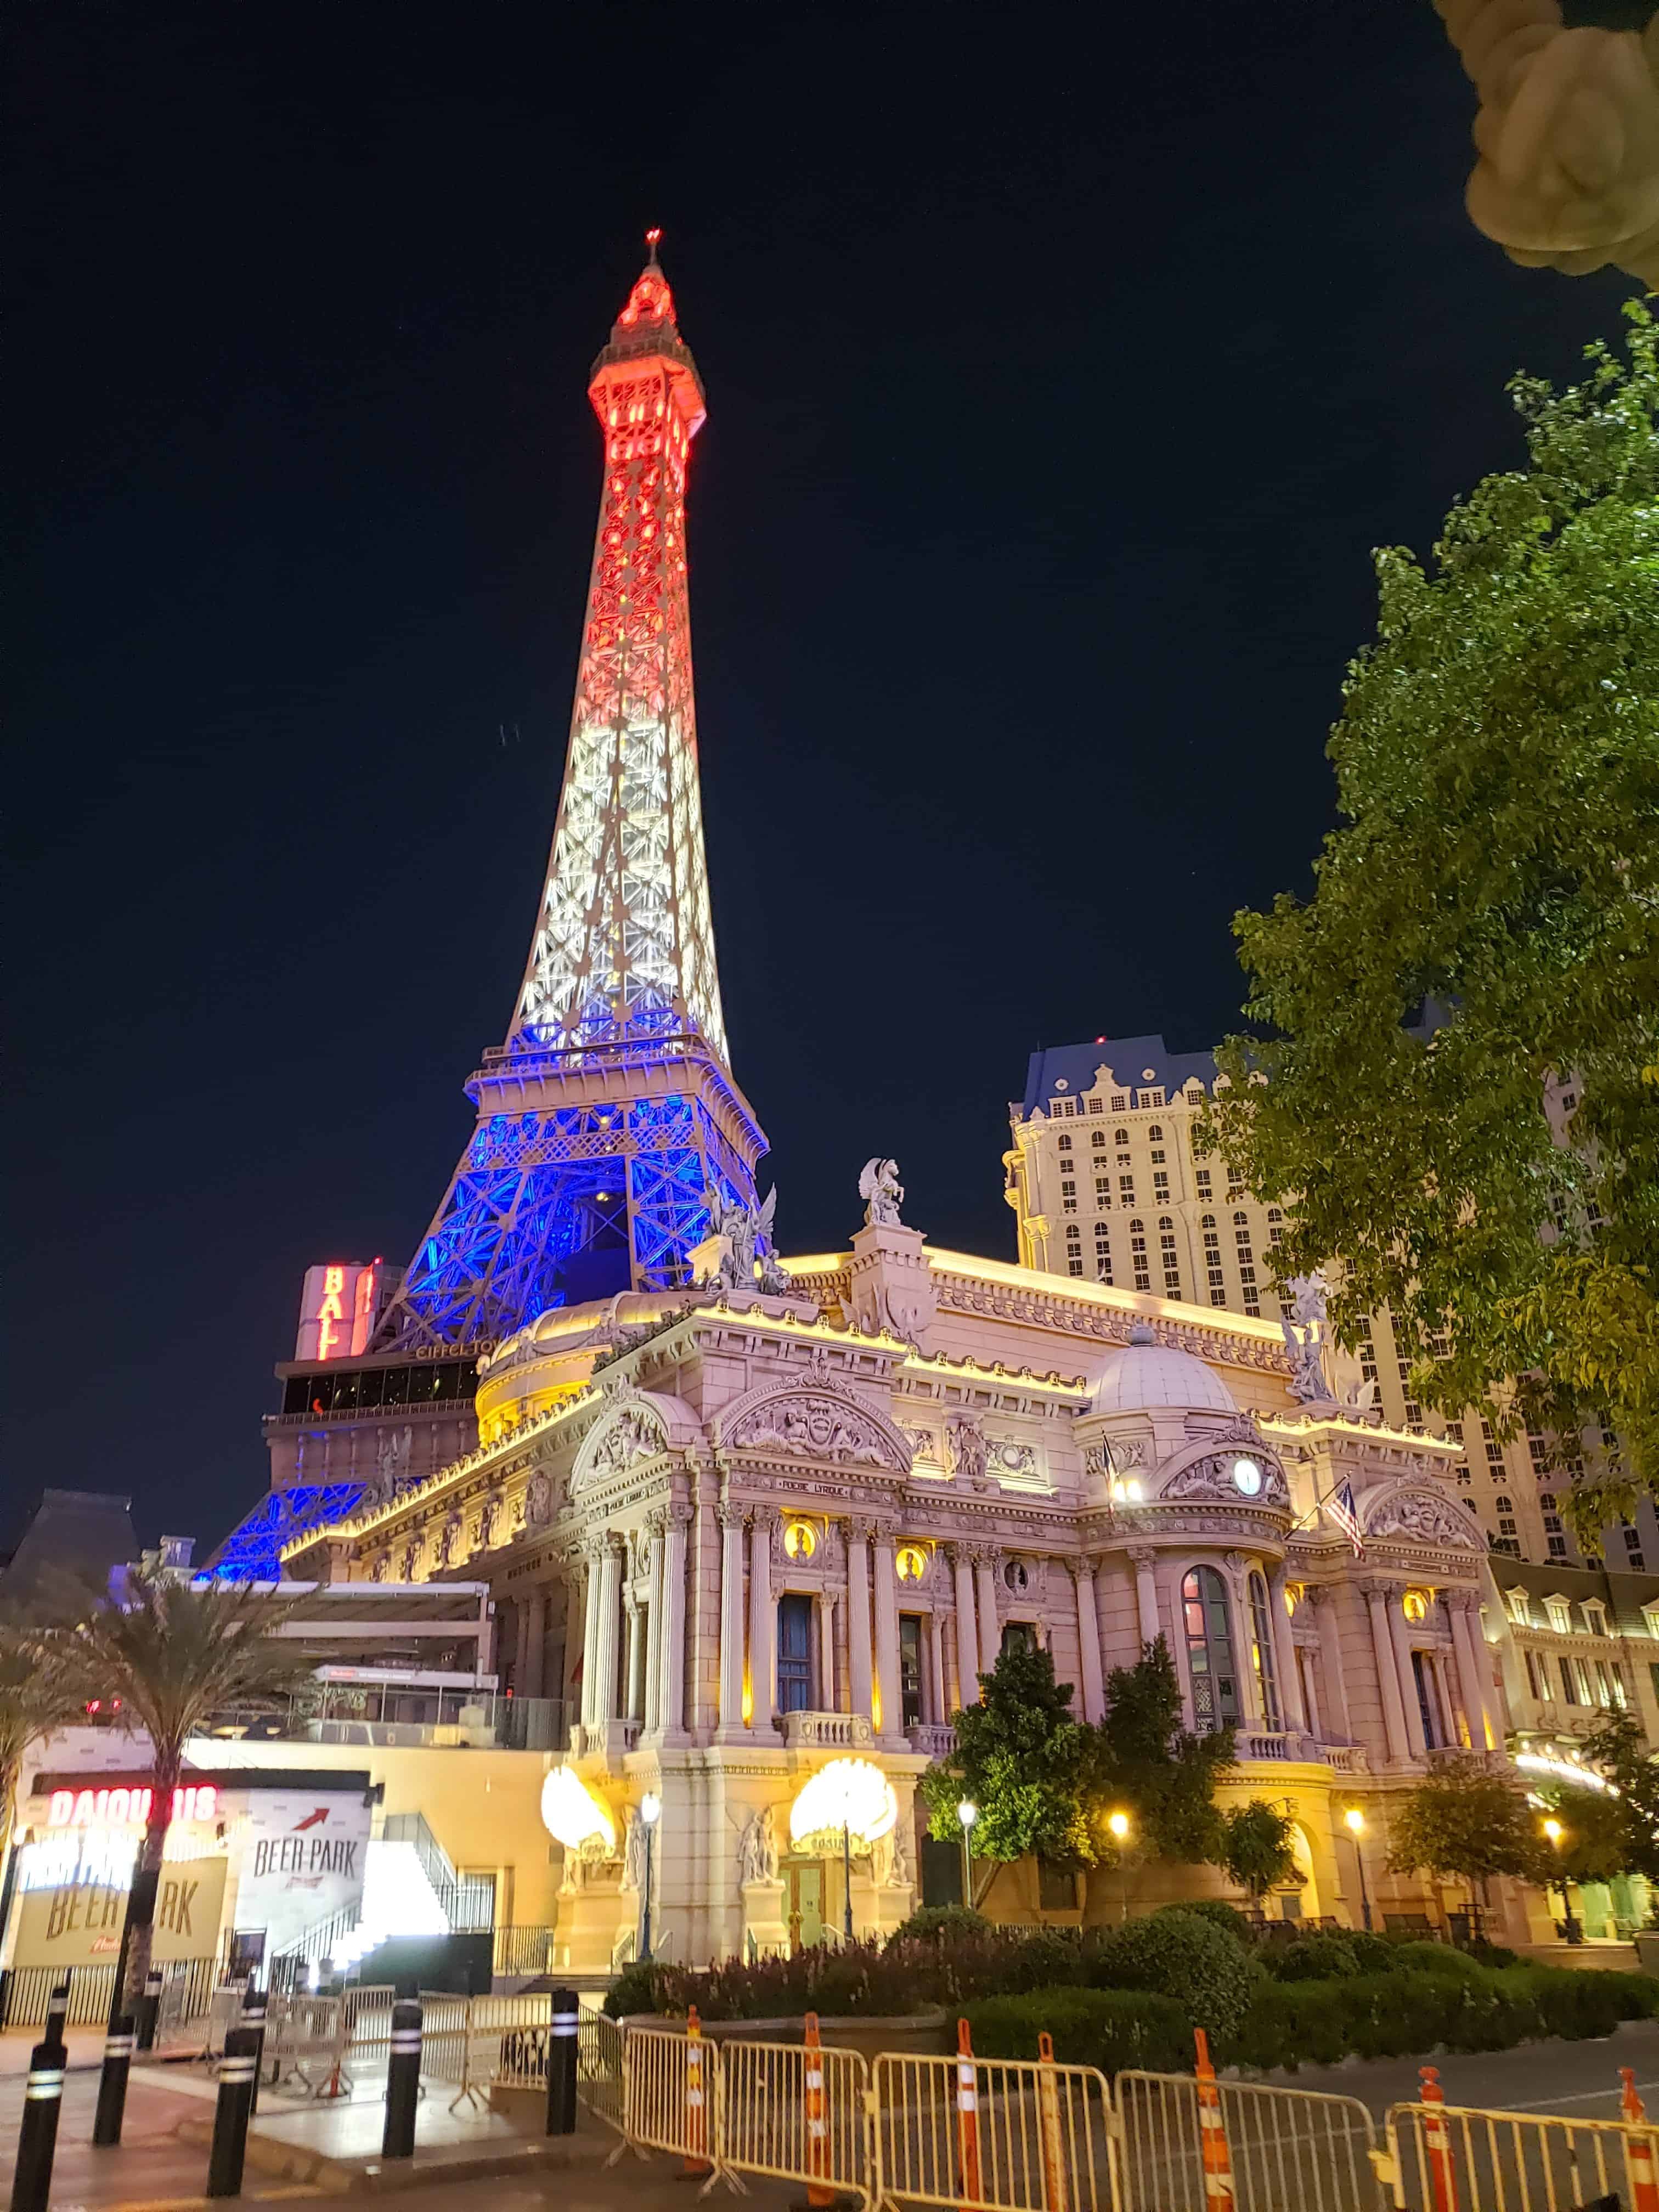 LAS VEGAS, USA - SEPTEMBER 27: Paris Las Vegas' Tour Eiffel Restaurant.  Replica Of Paris' Eiffel Tower Was Built In 1999 As Part Of Paris Las Vegas  Hotel And Casino. September 27